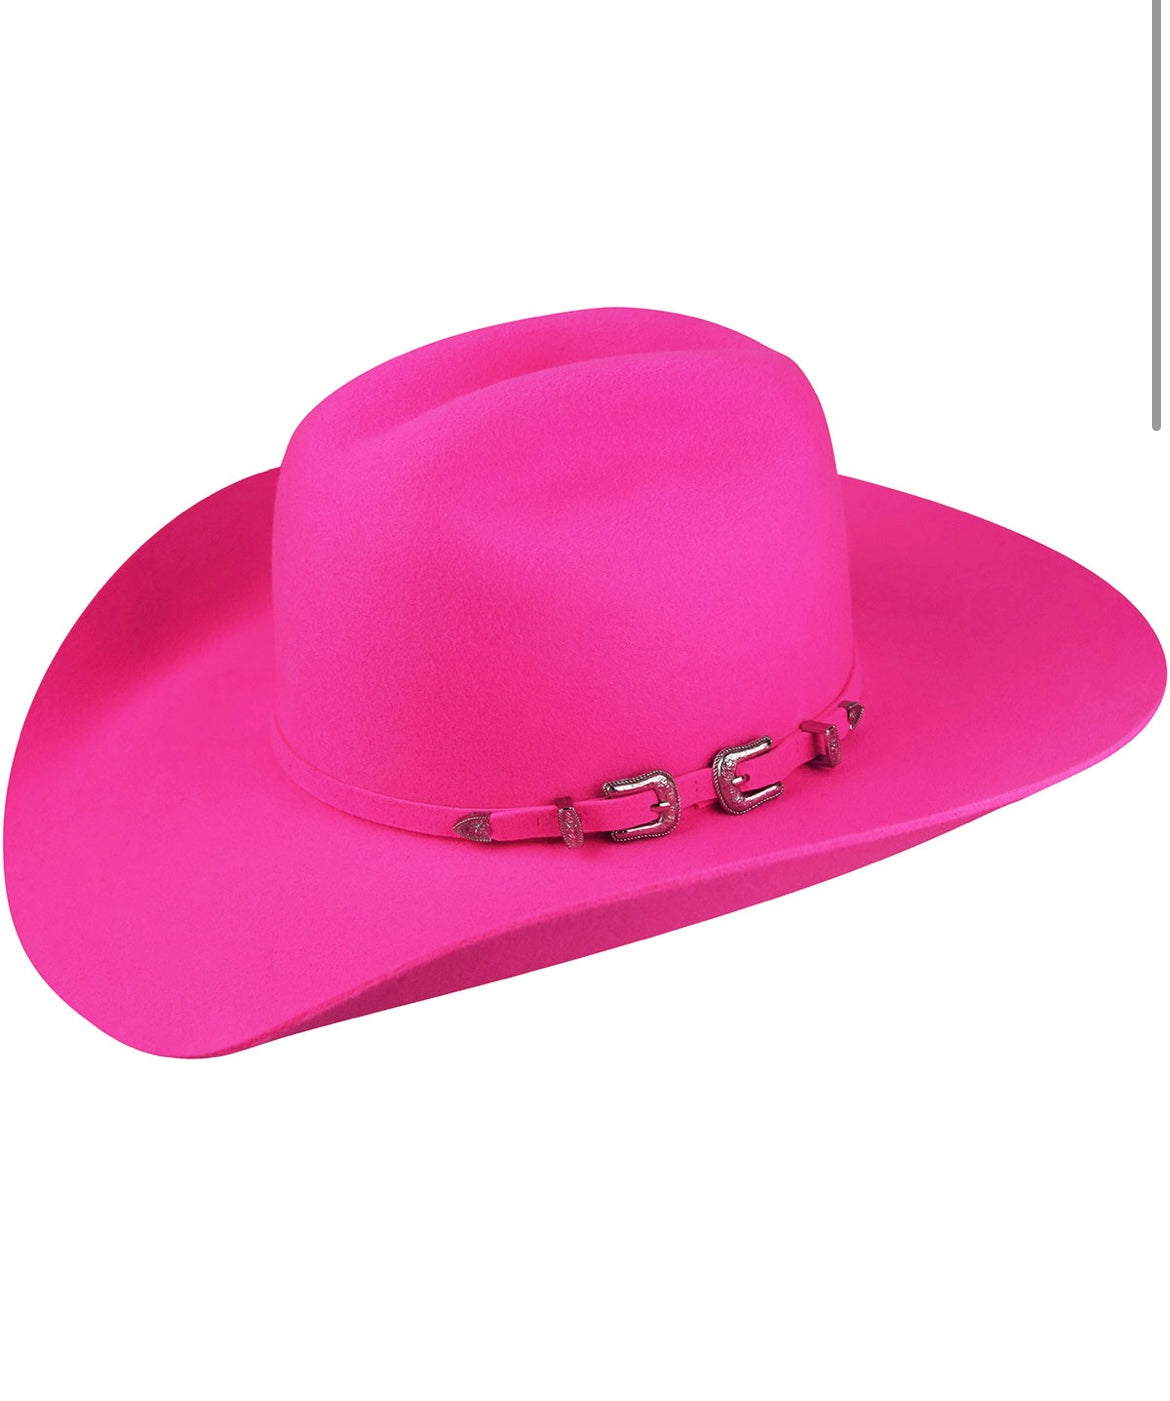 Bailey Punchy Pink Felt Hat